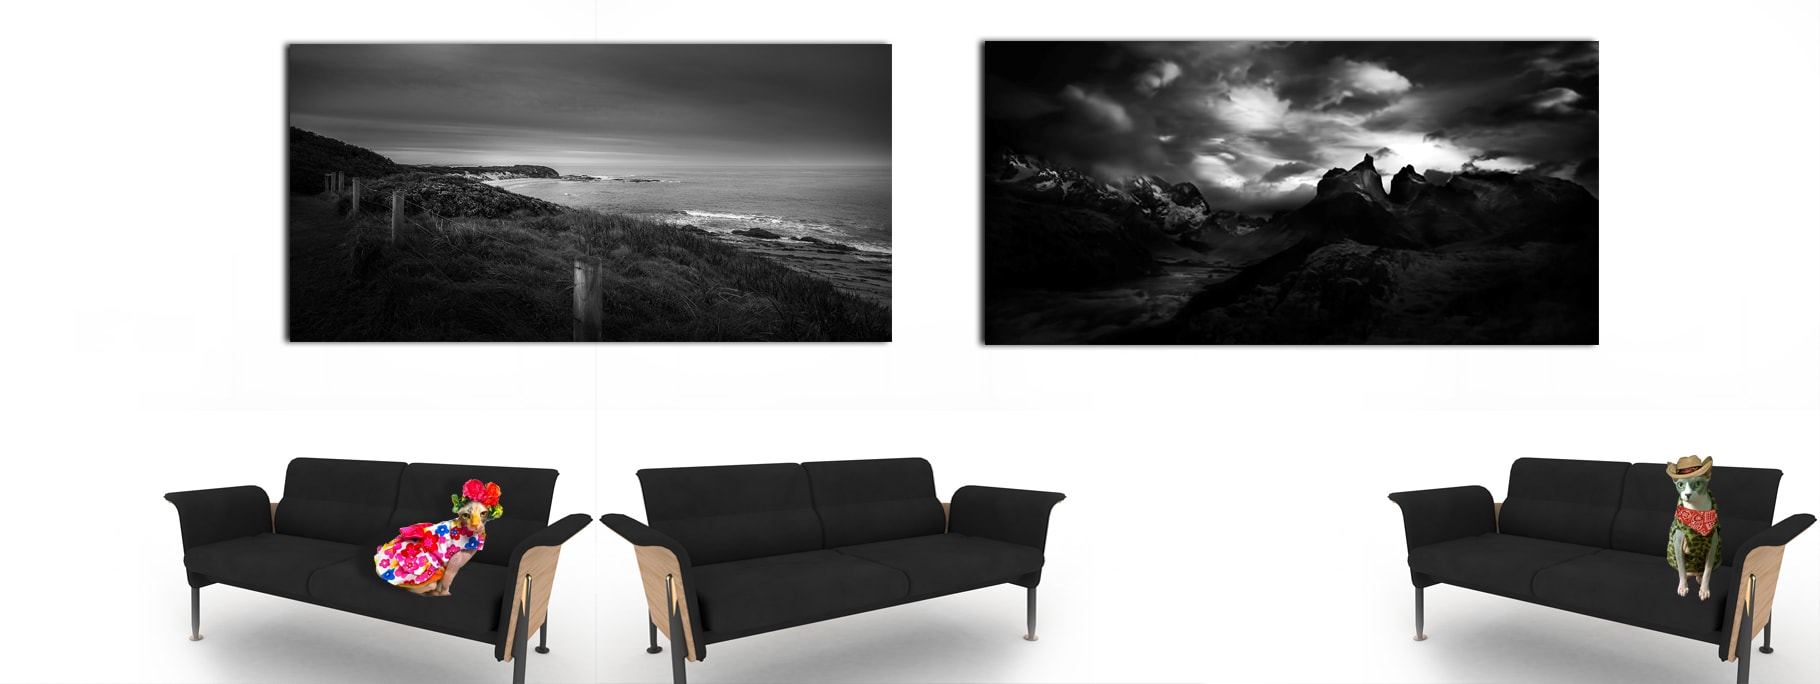 Black and White Panorama - Panoramic Landscape Photos